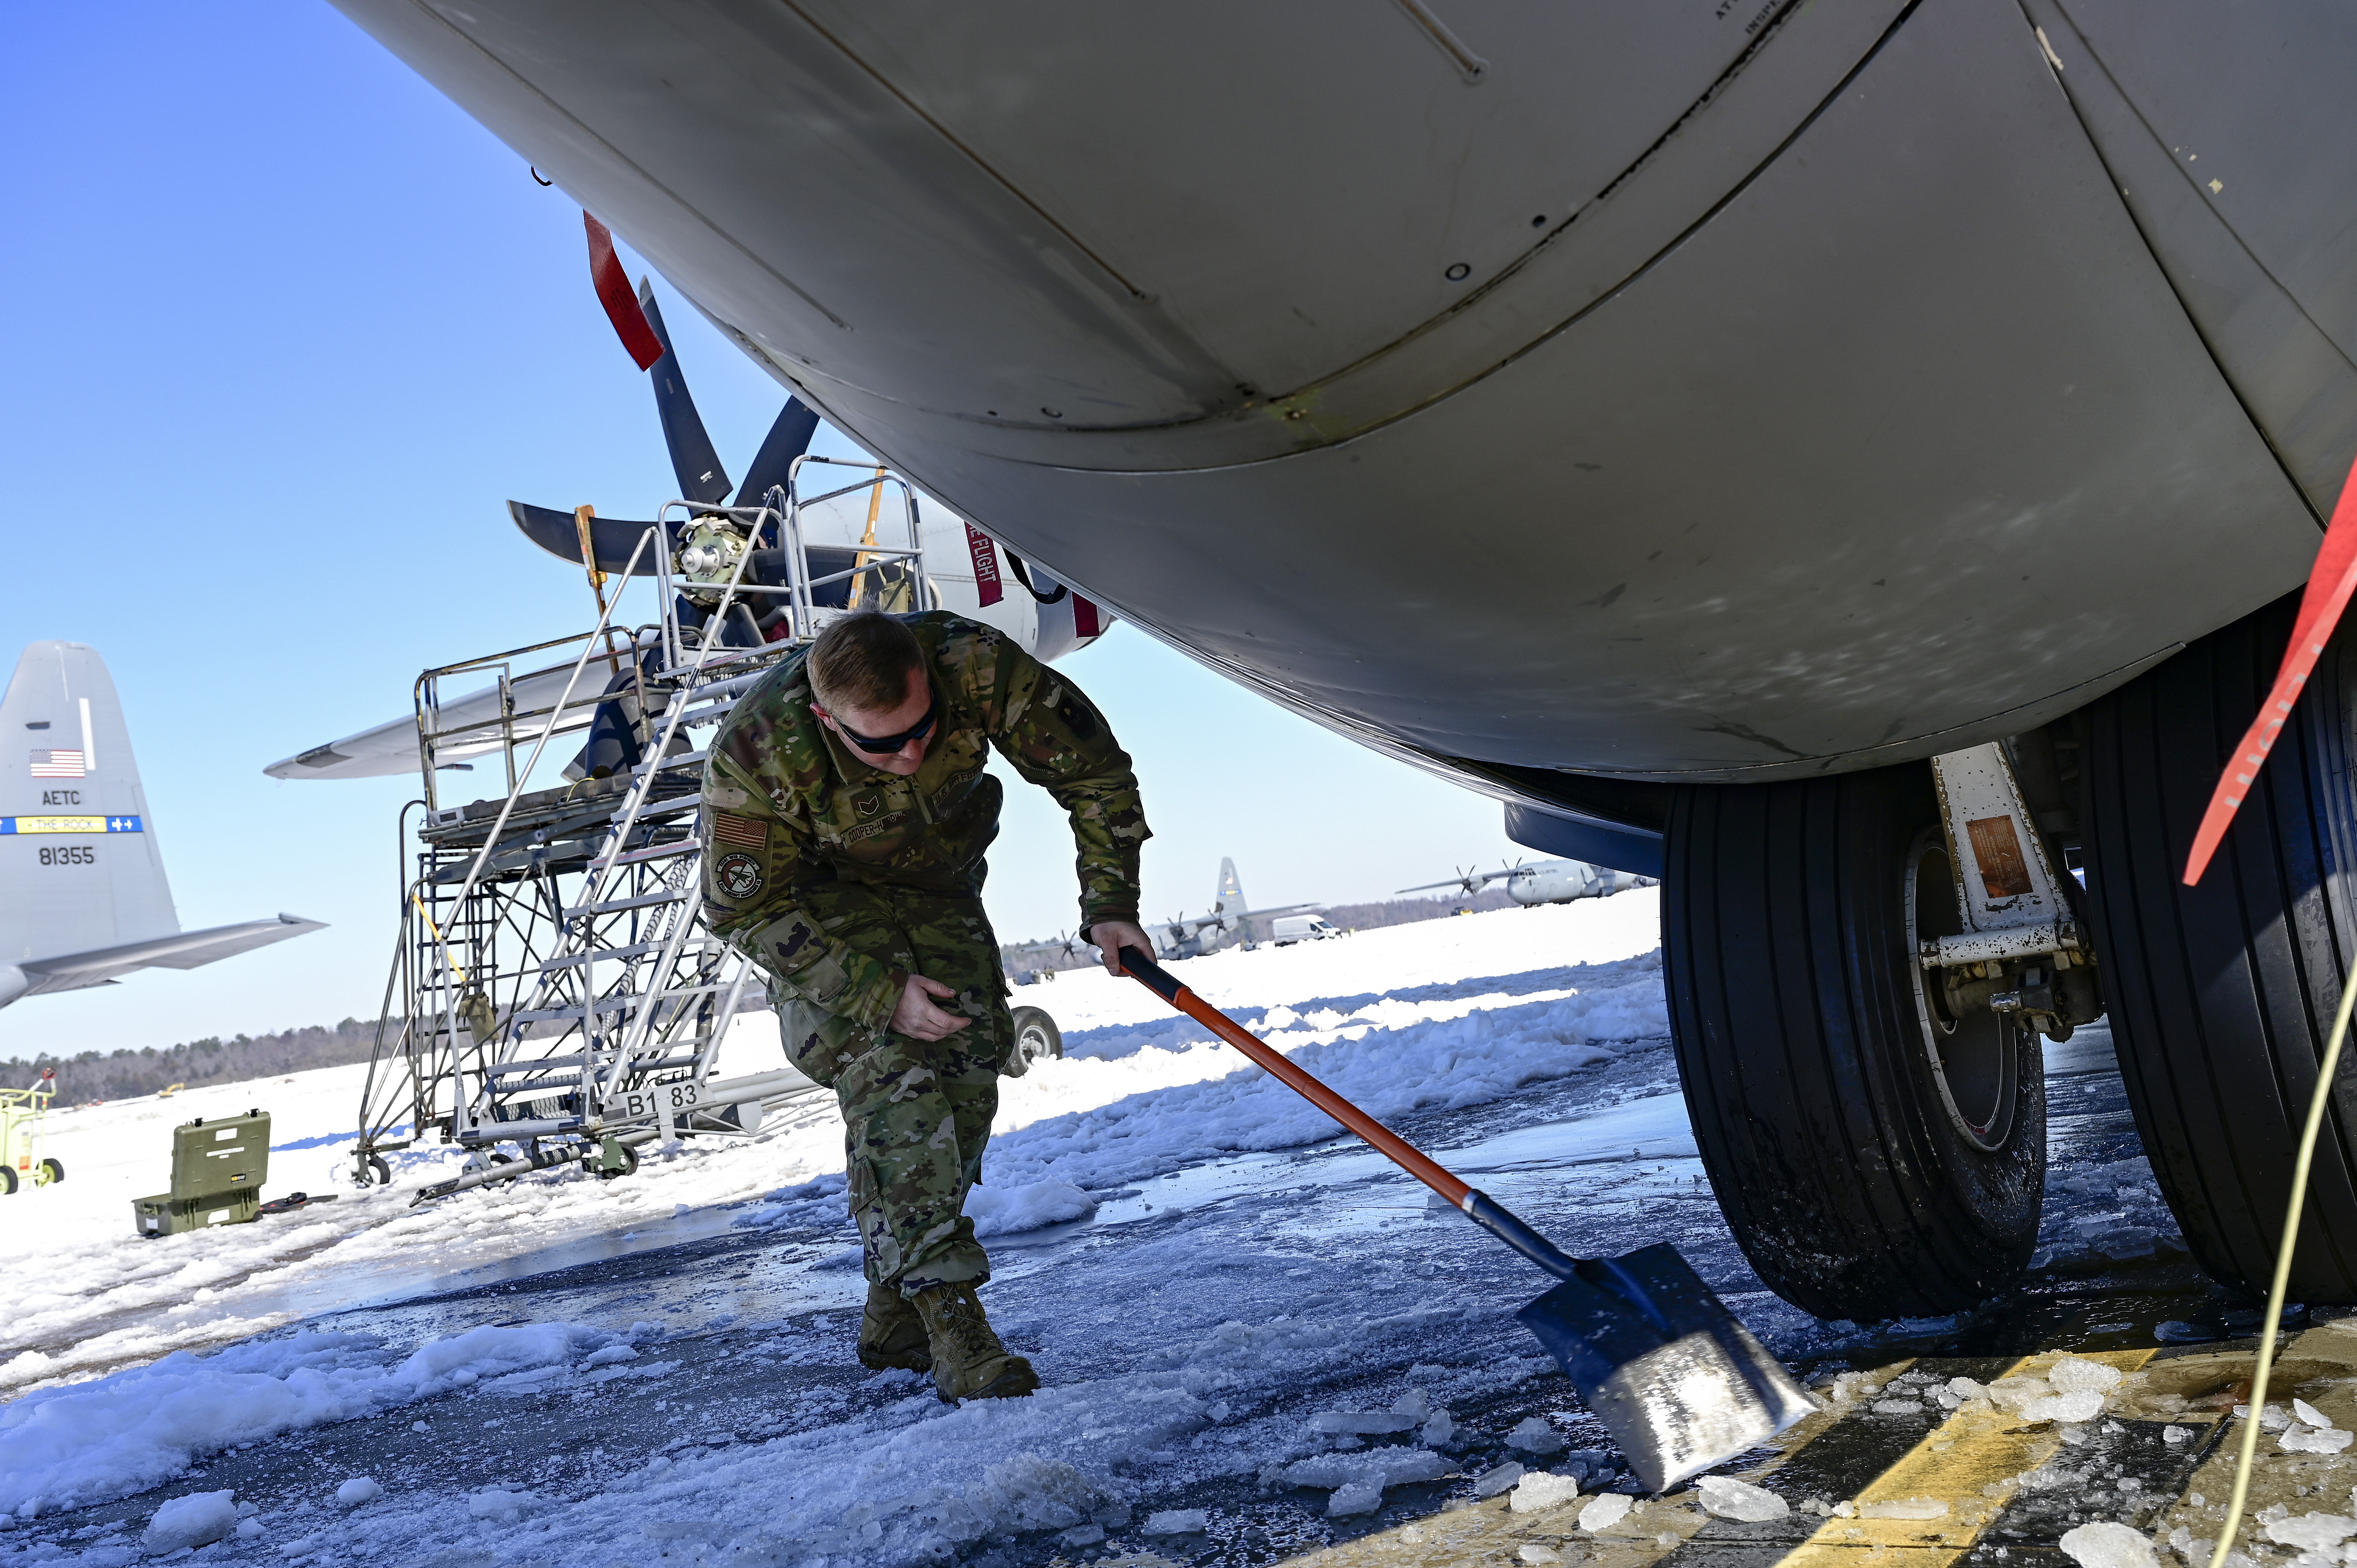 Lrafb Resumes Flight Operations After Historic Snowfall